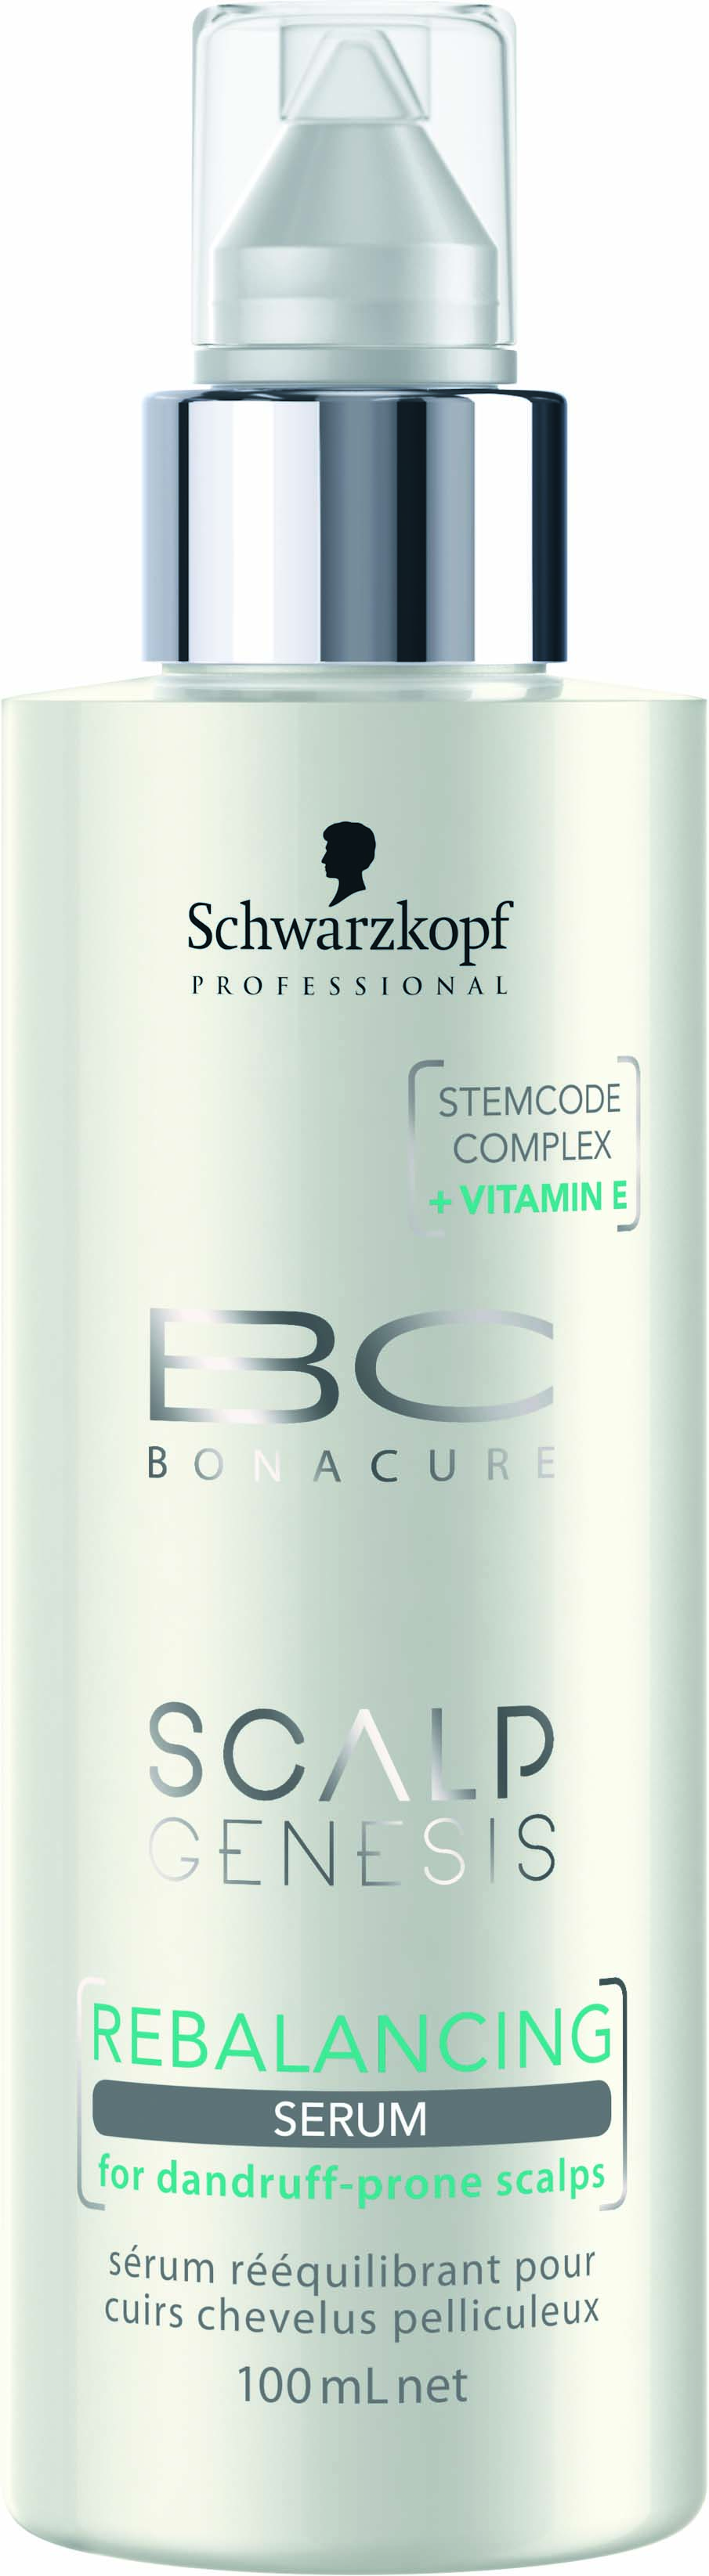 Bona Cure Scalp Rebalancing Serum, 100 ml